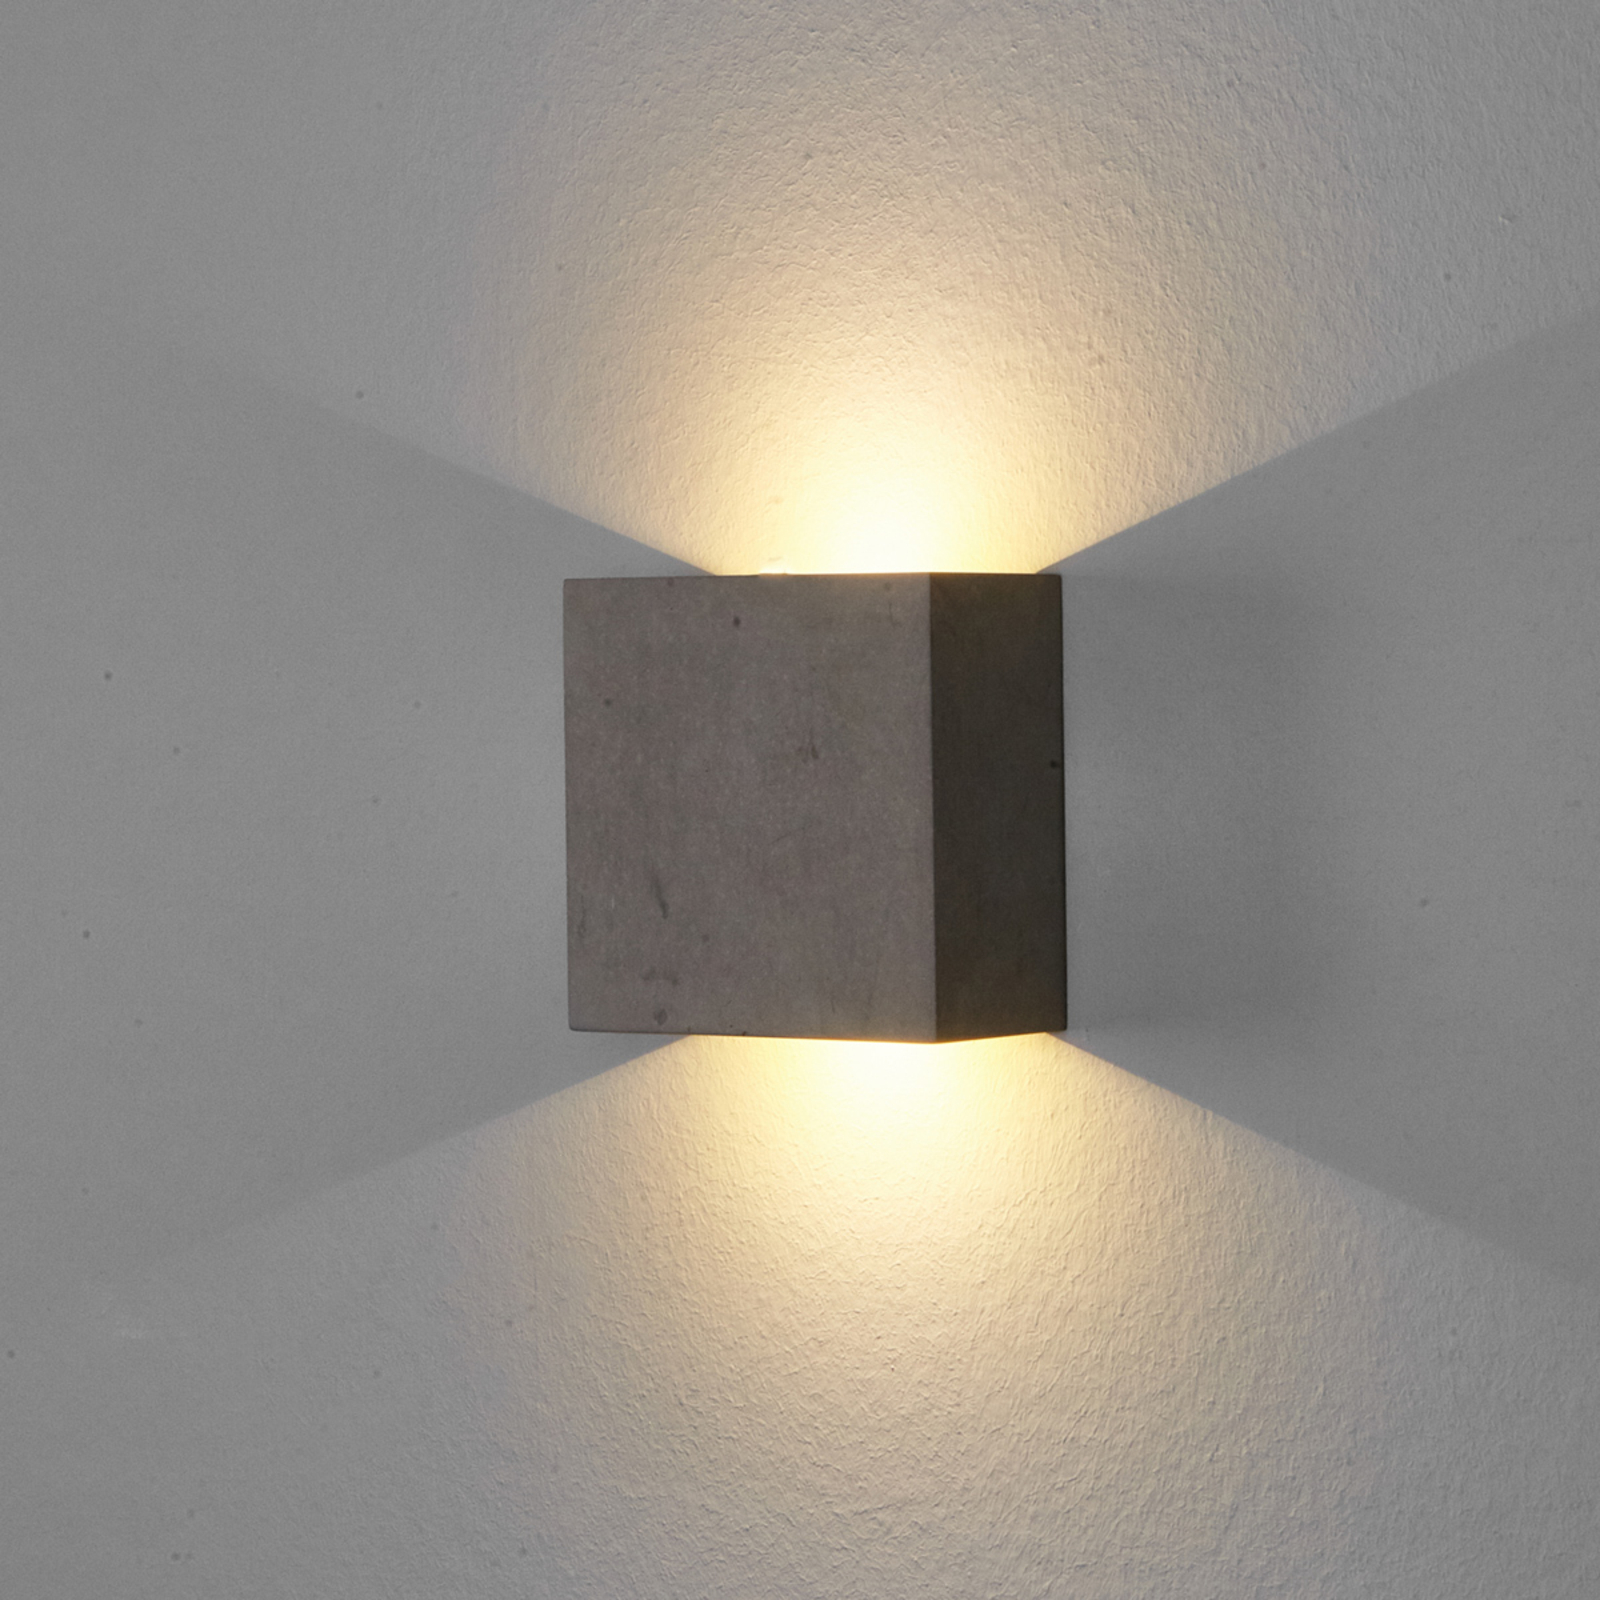 Yva - LED wall light, concrete